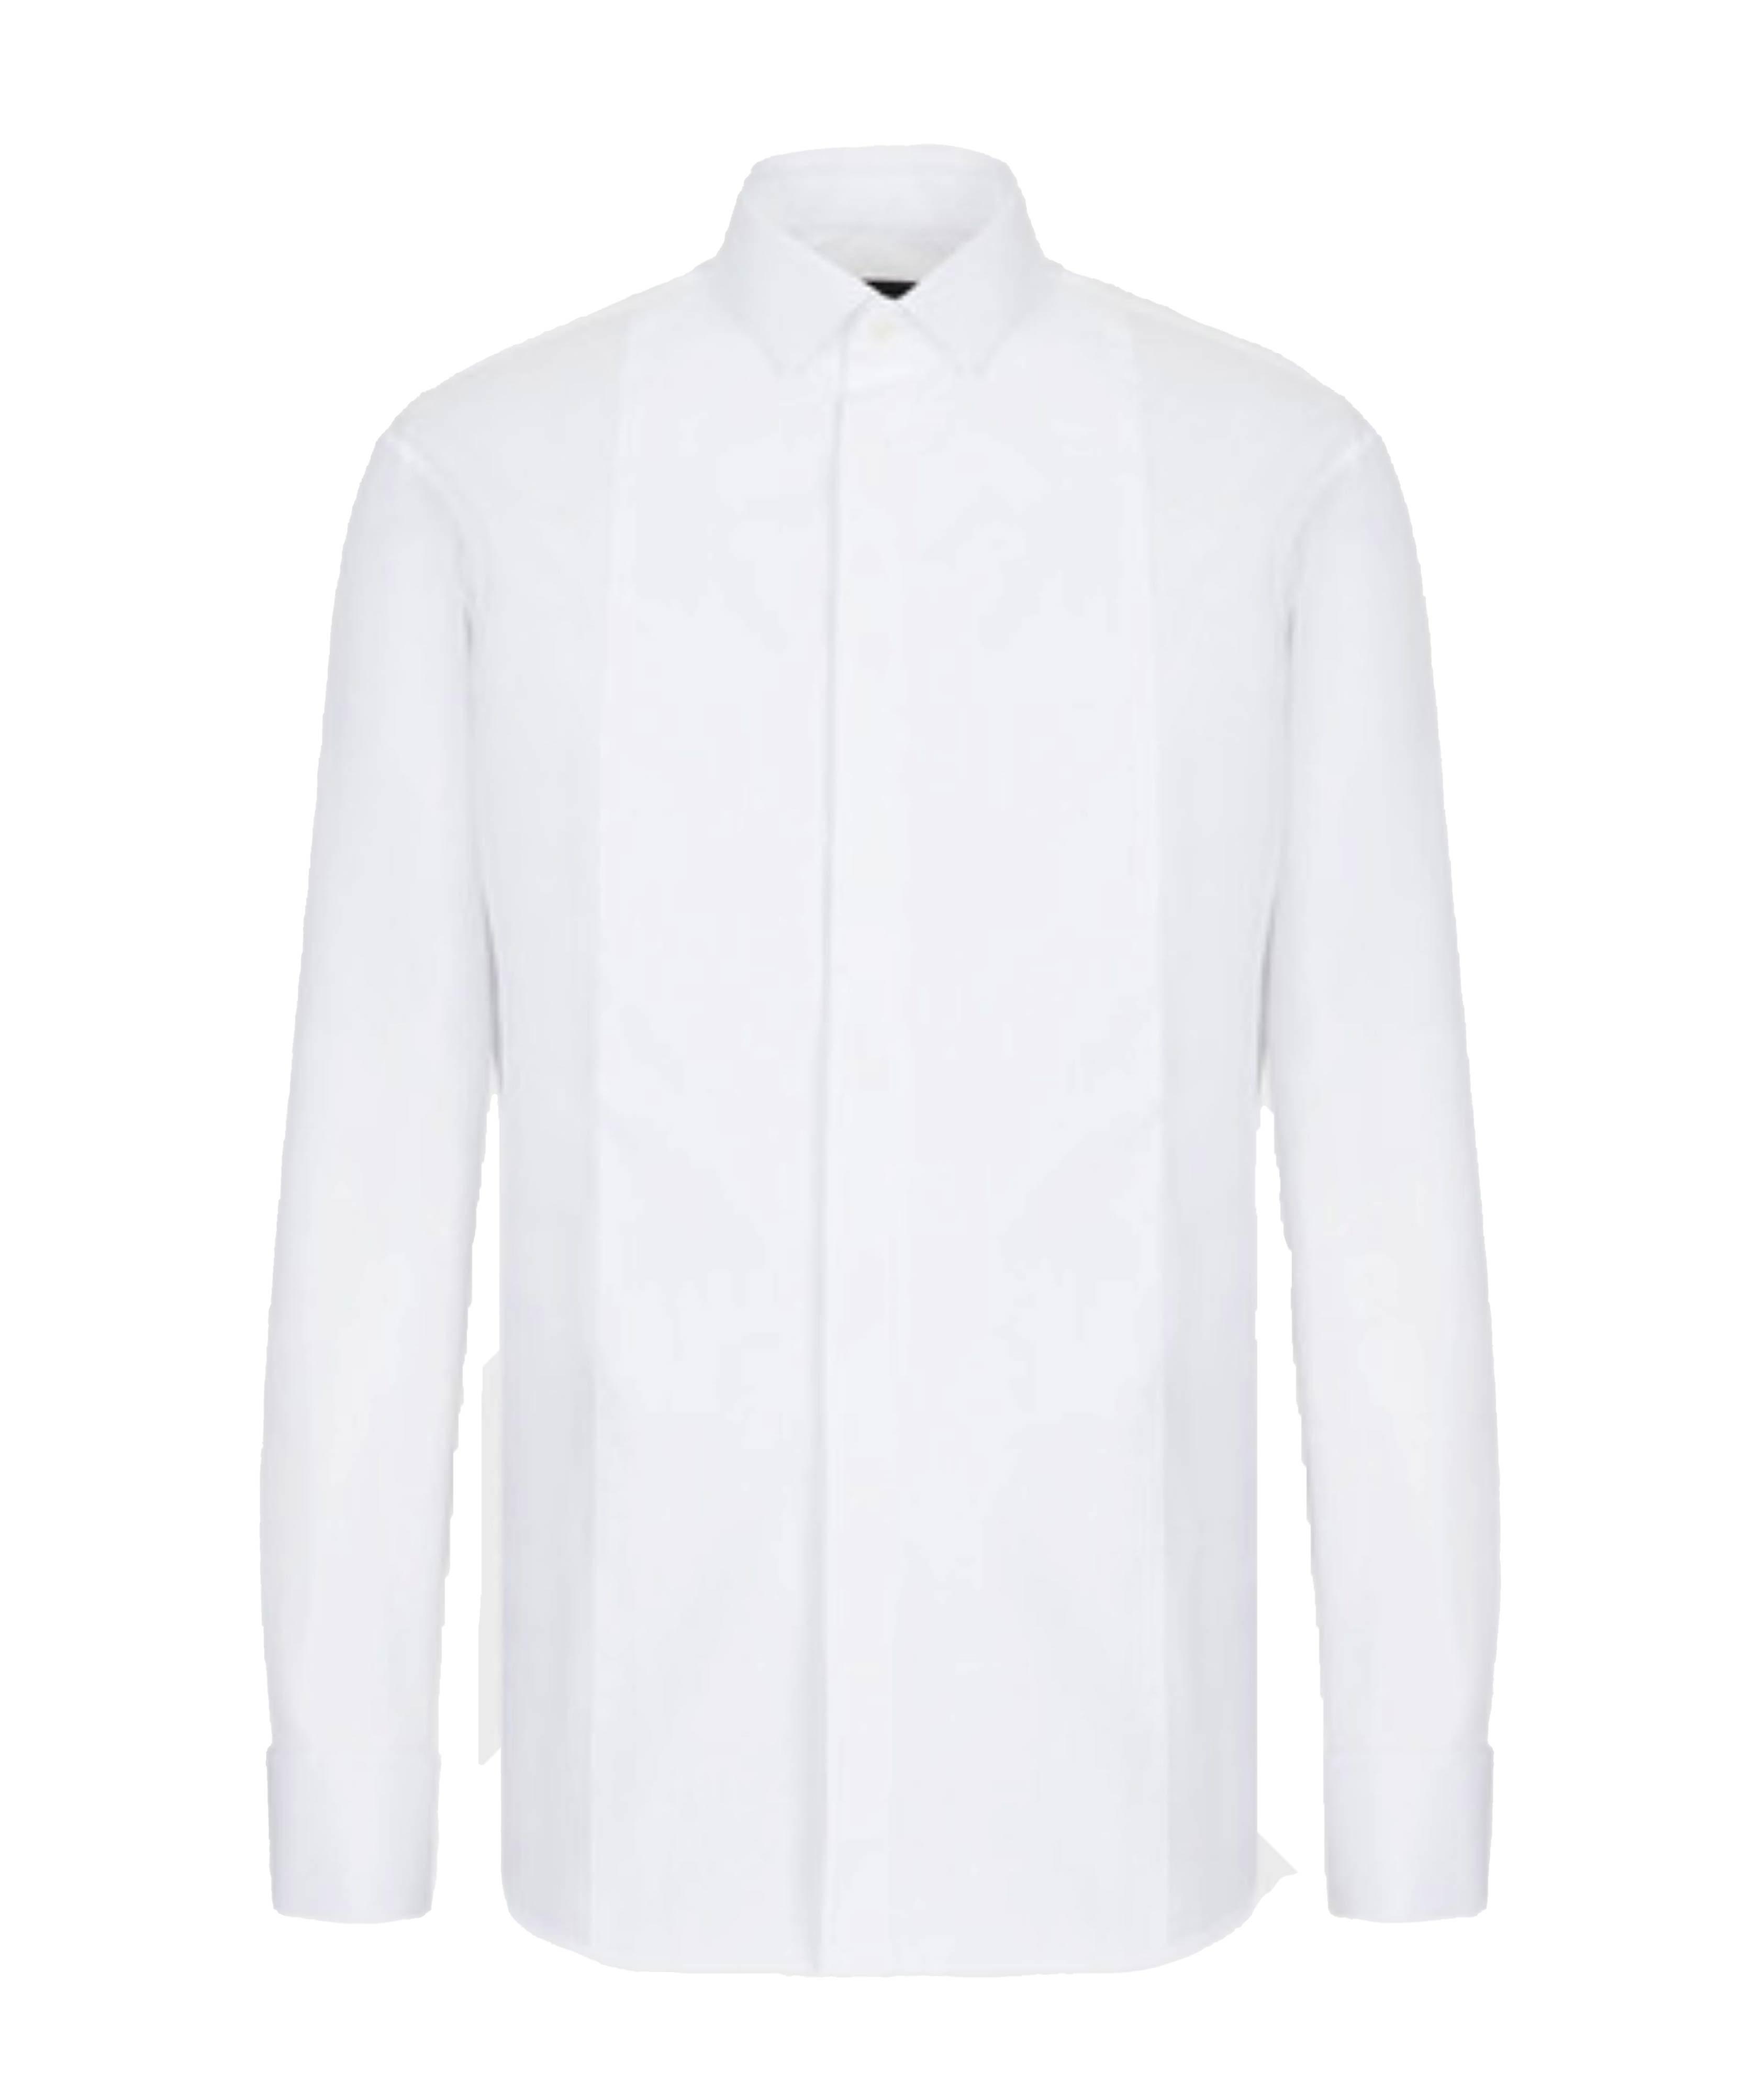 Slim-Fit Cotton Tuxedo Shirt image 0